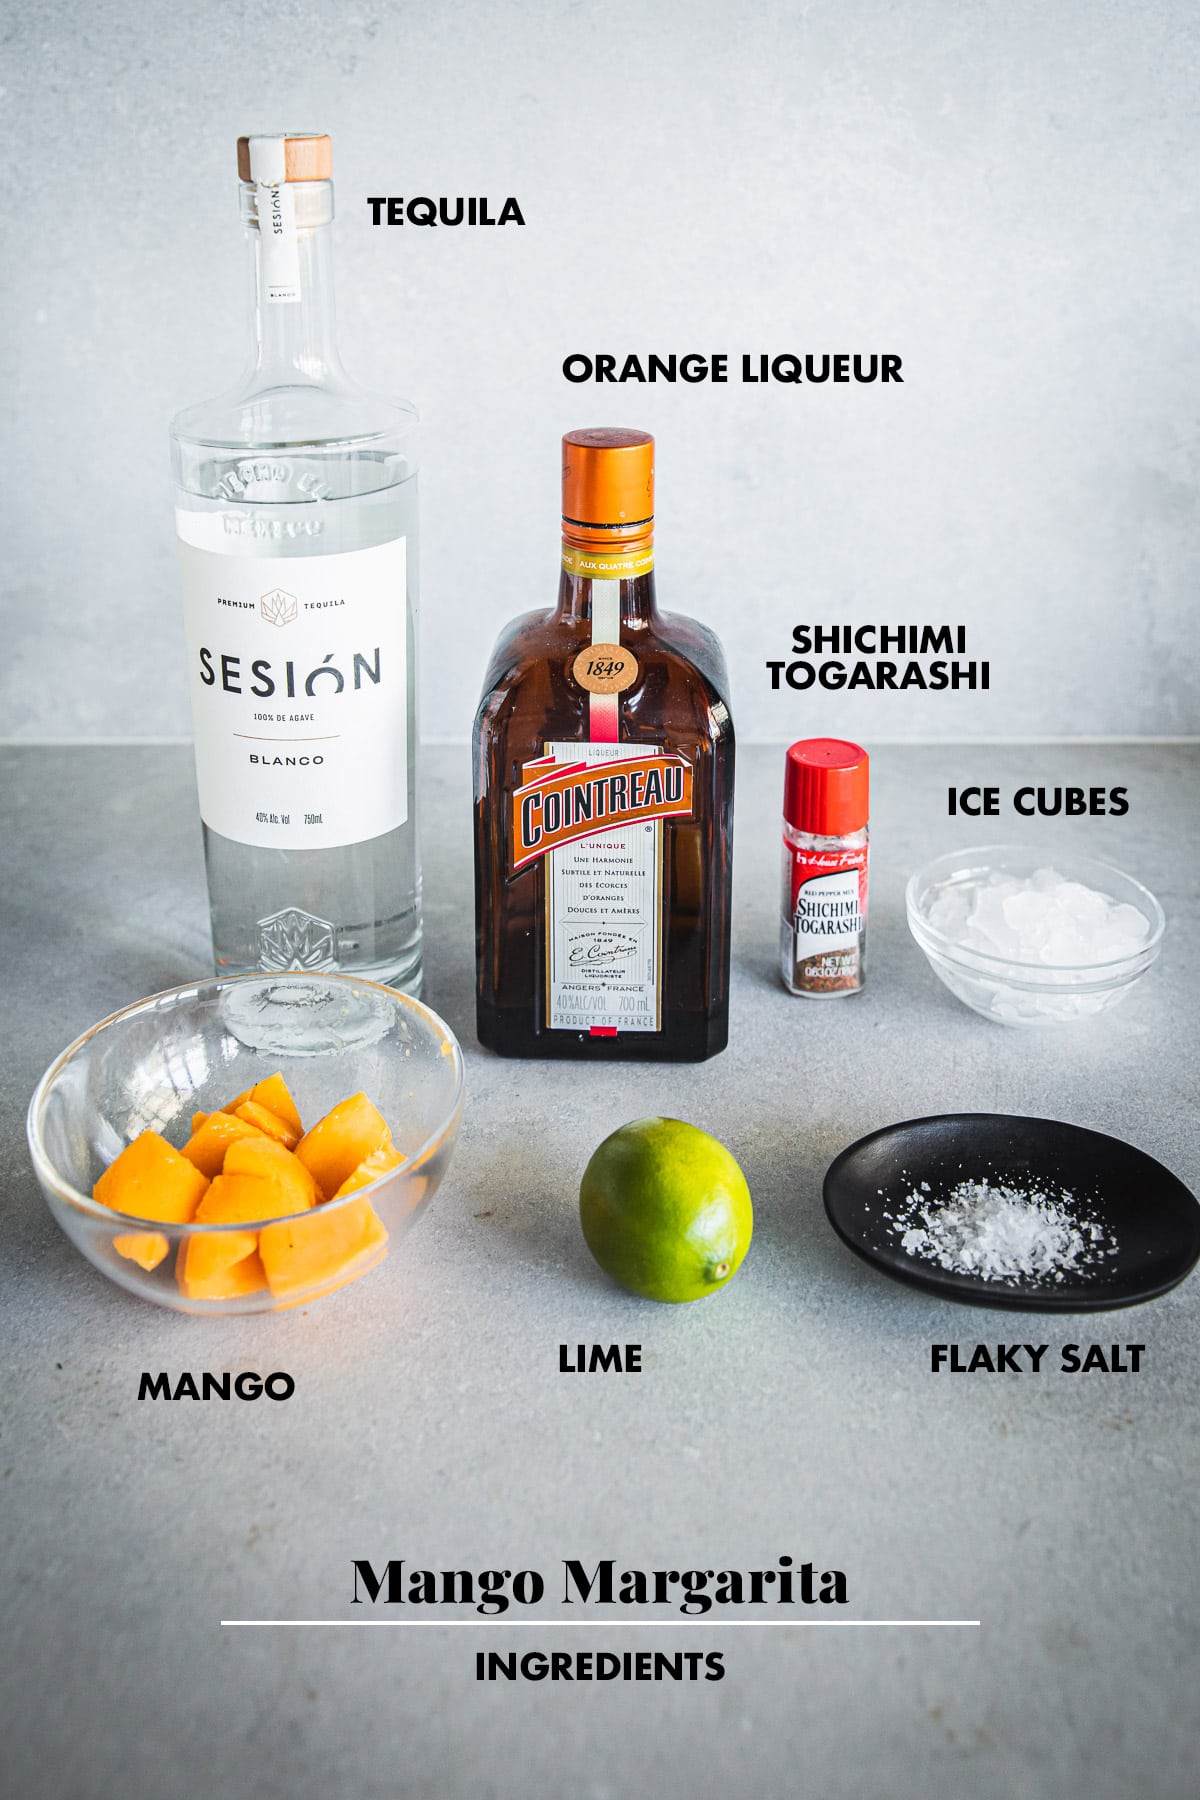 Mango margarita ingredients laid out and labeled - tequila, orange liqueur, Shichimi Togarashi, mango, lime, salt and ice.